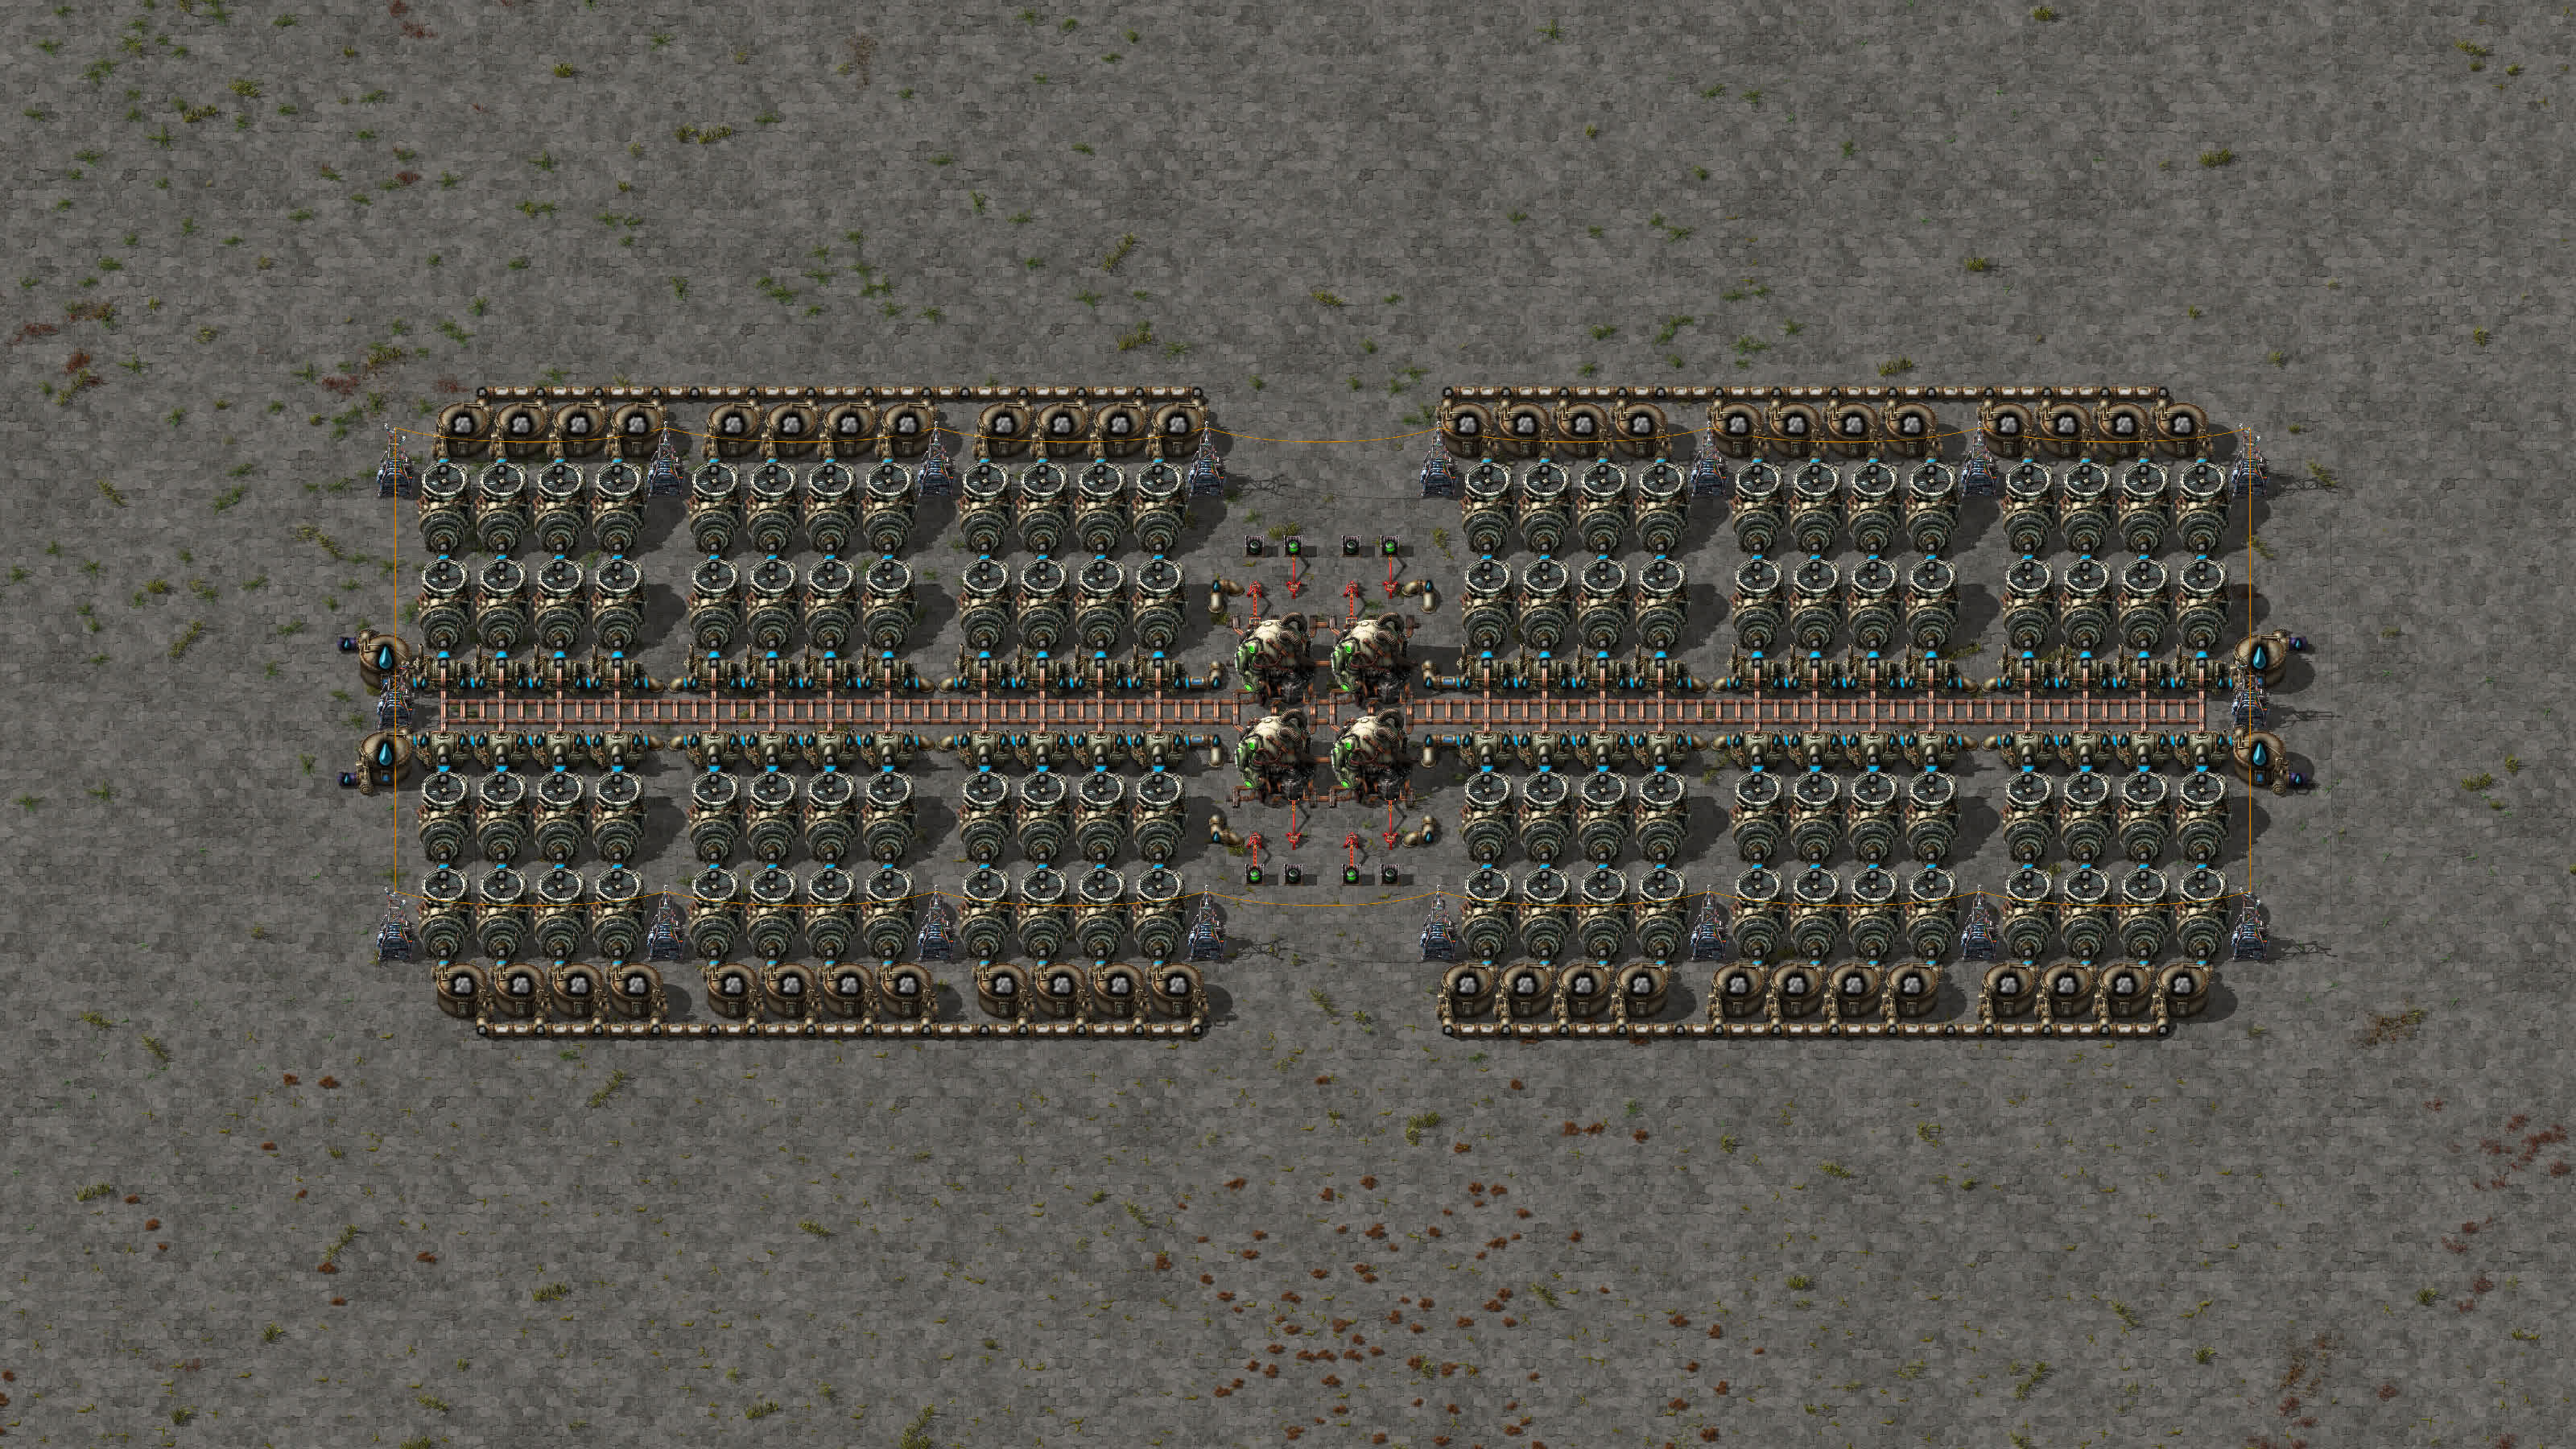 480 MW reactor setup